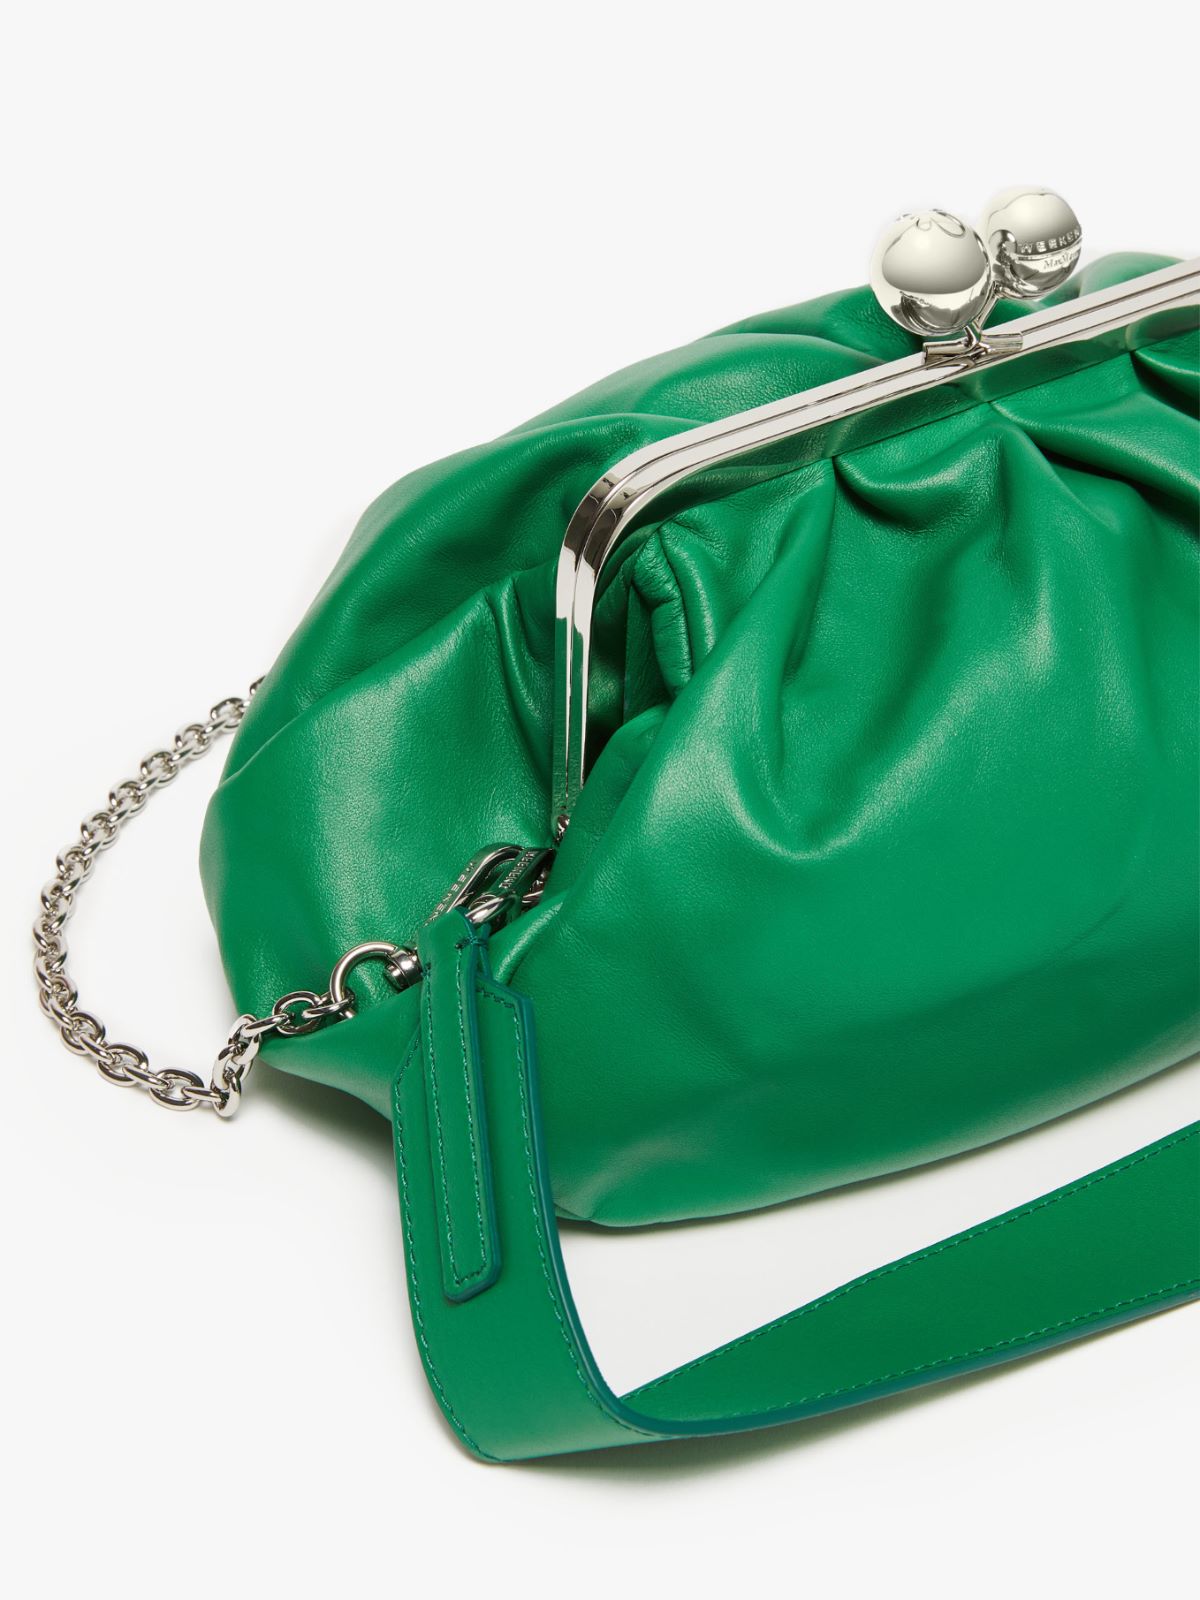 Medium Pasticcino Bag in nappa leather - GREEN - Weekend Max Mara - 4